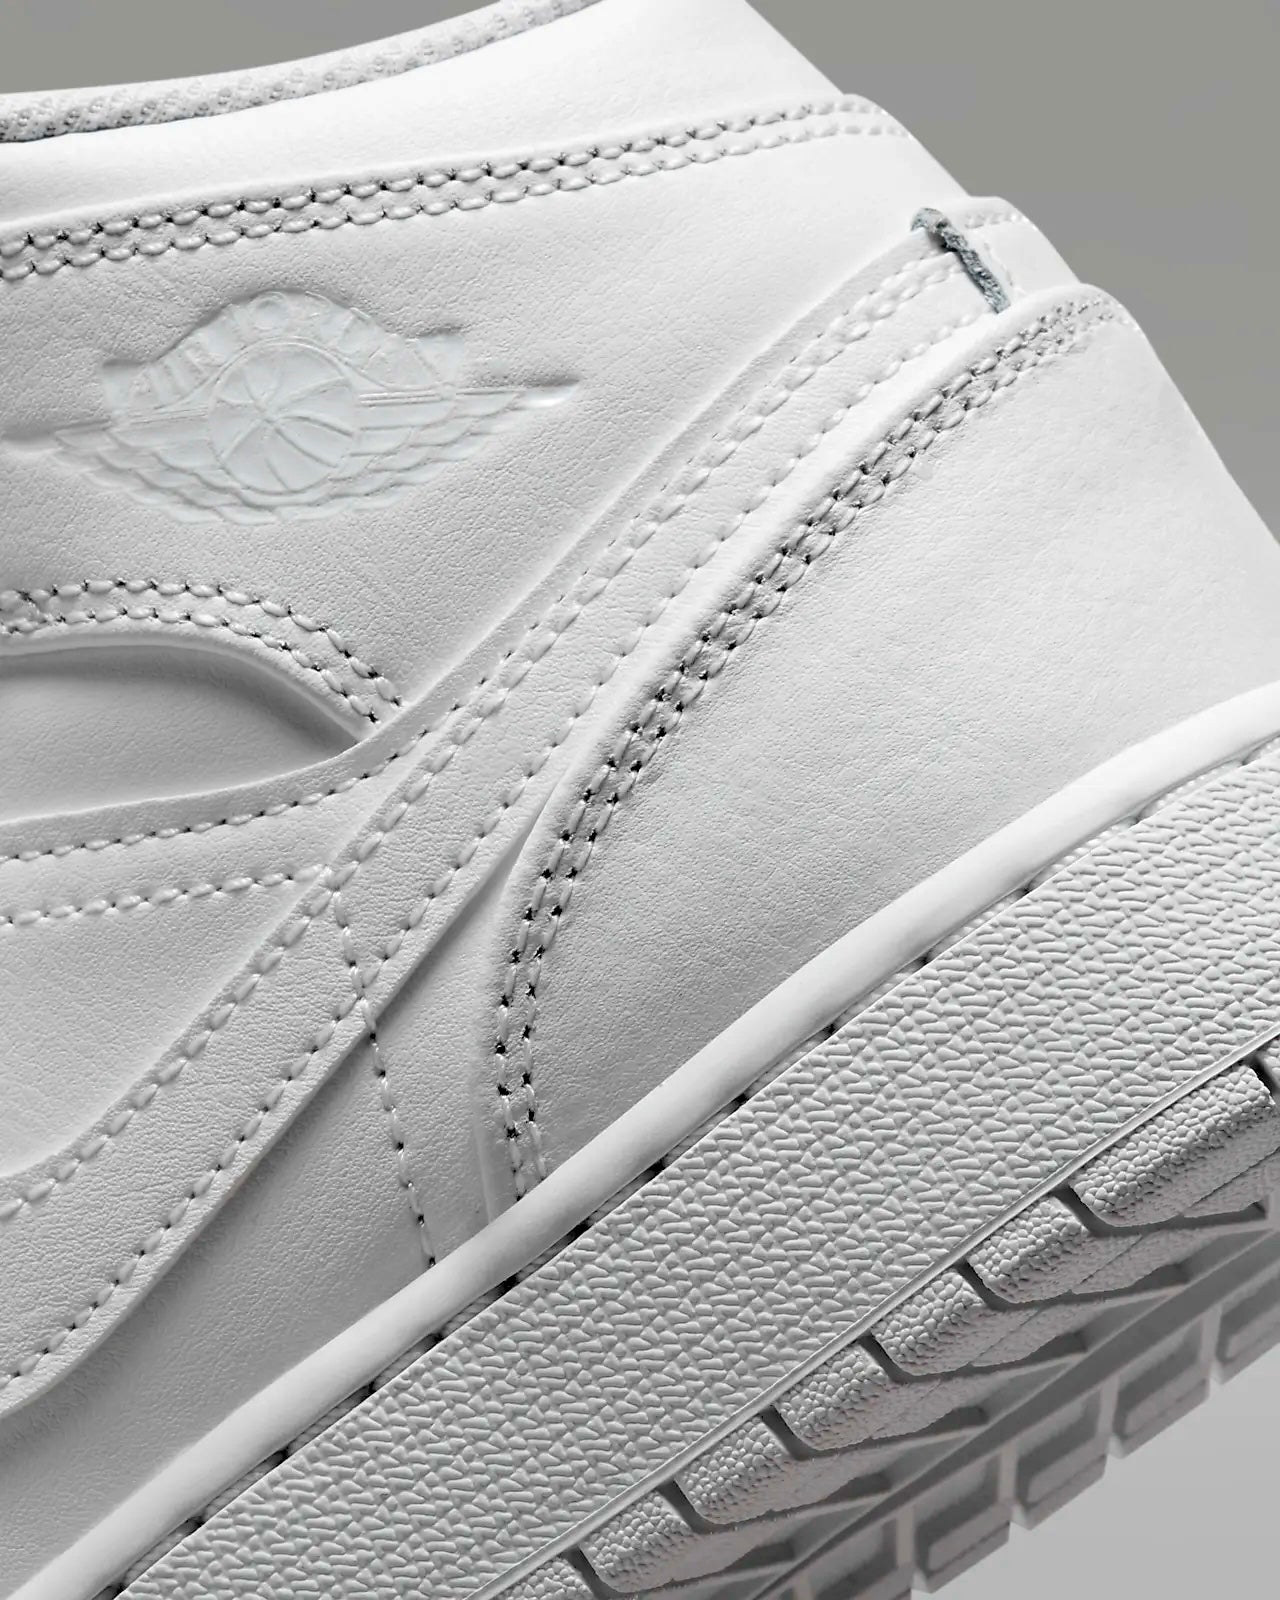 Nike - Air Jordan 1 - White